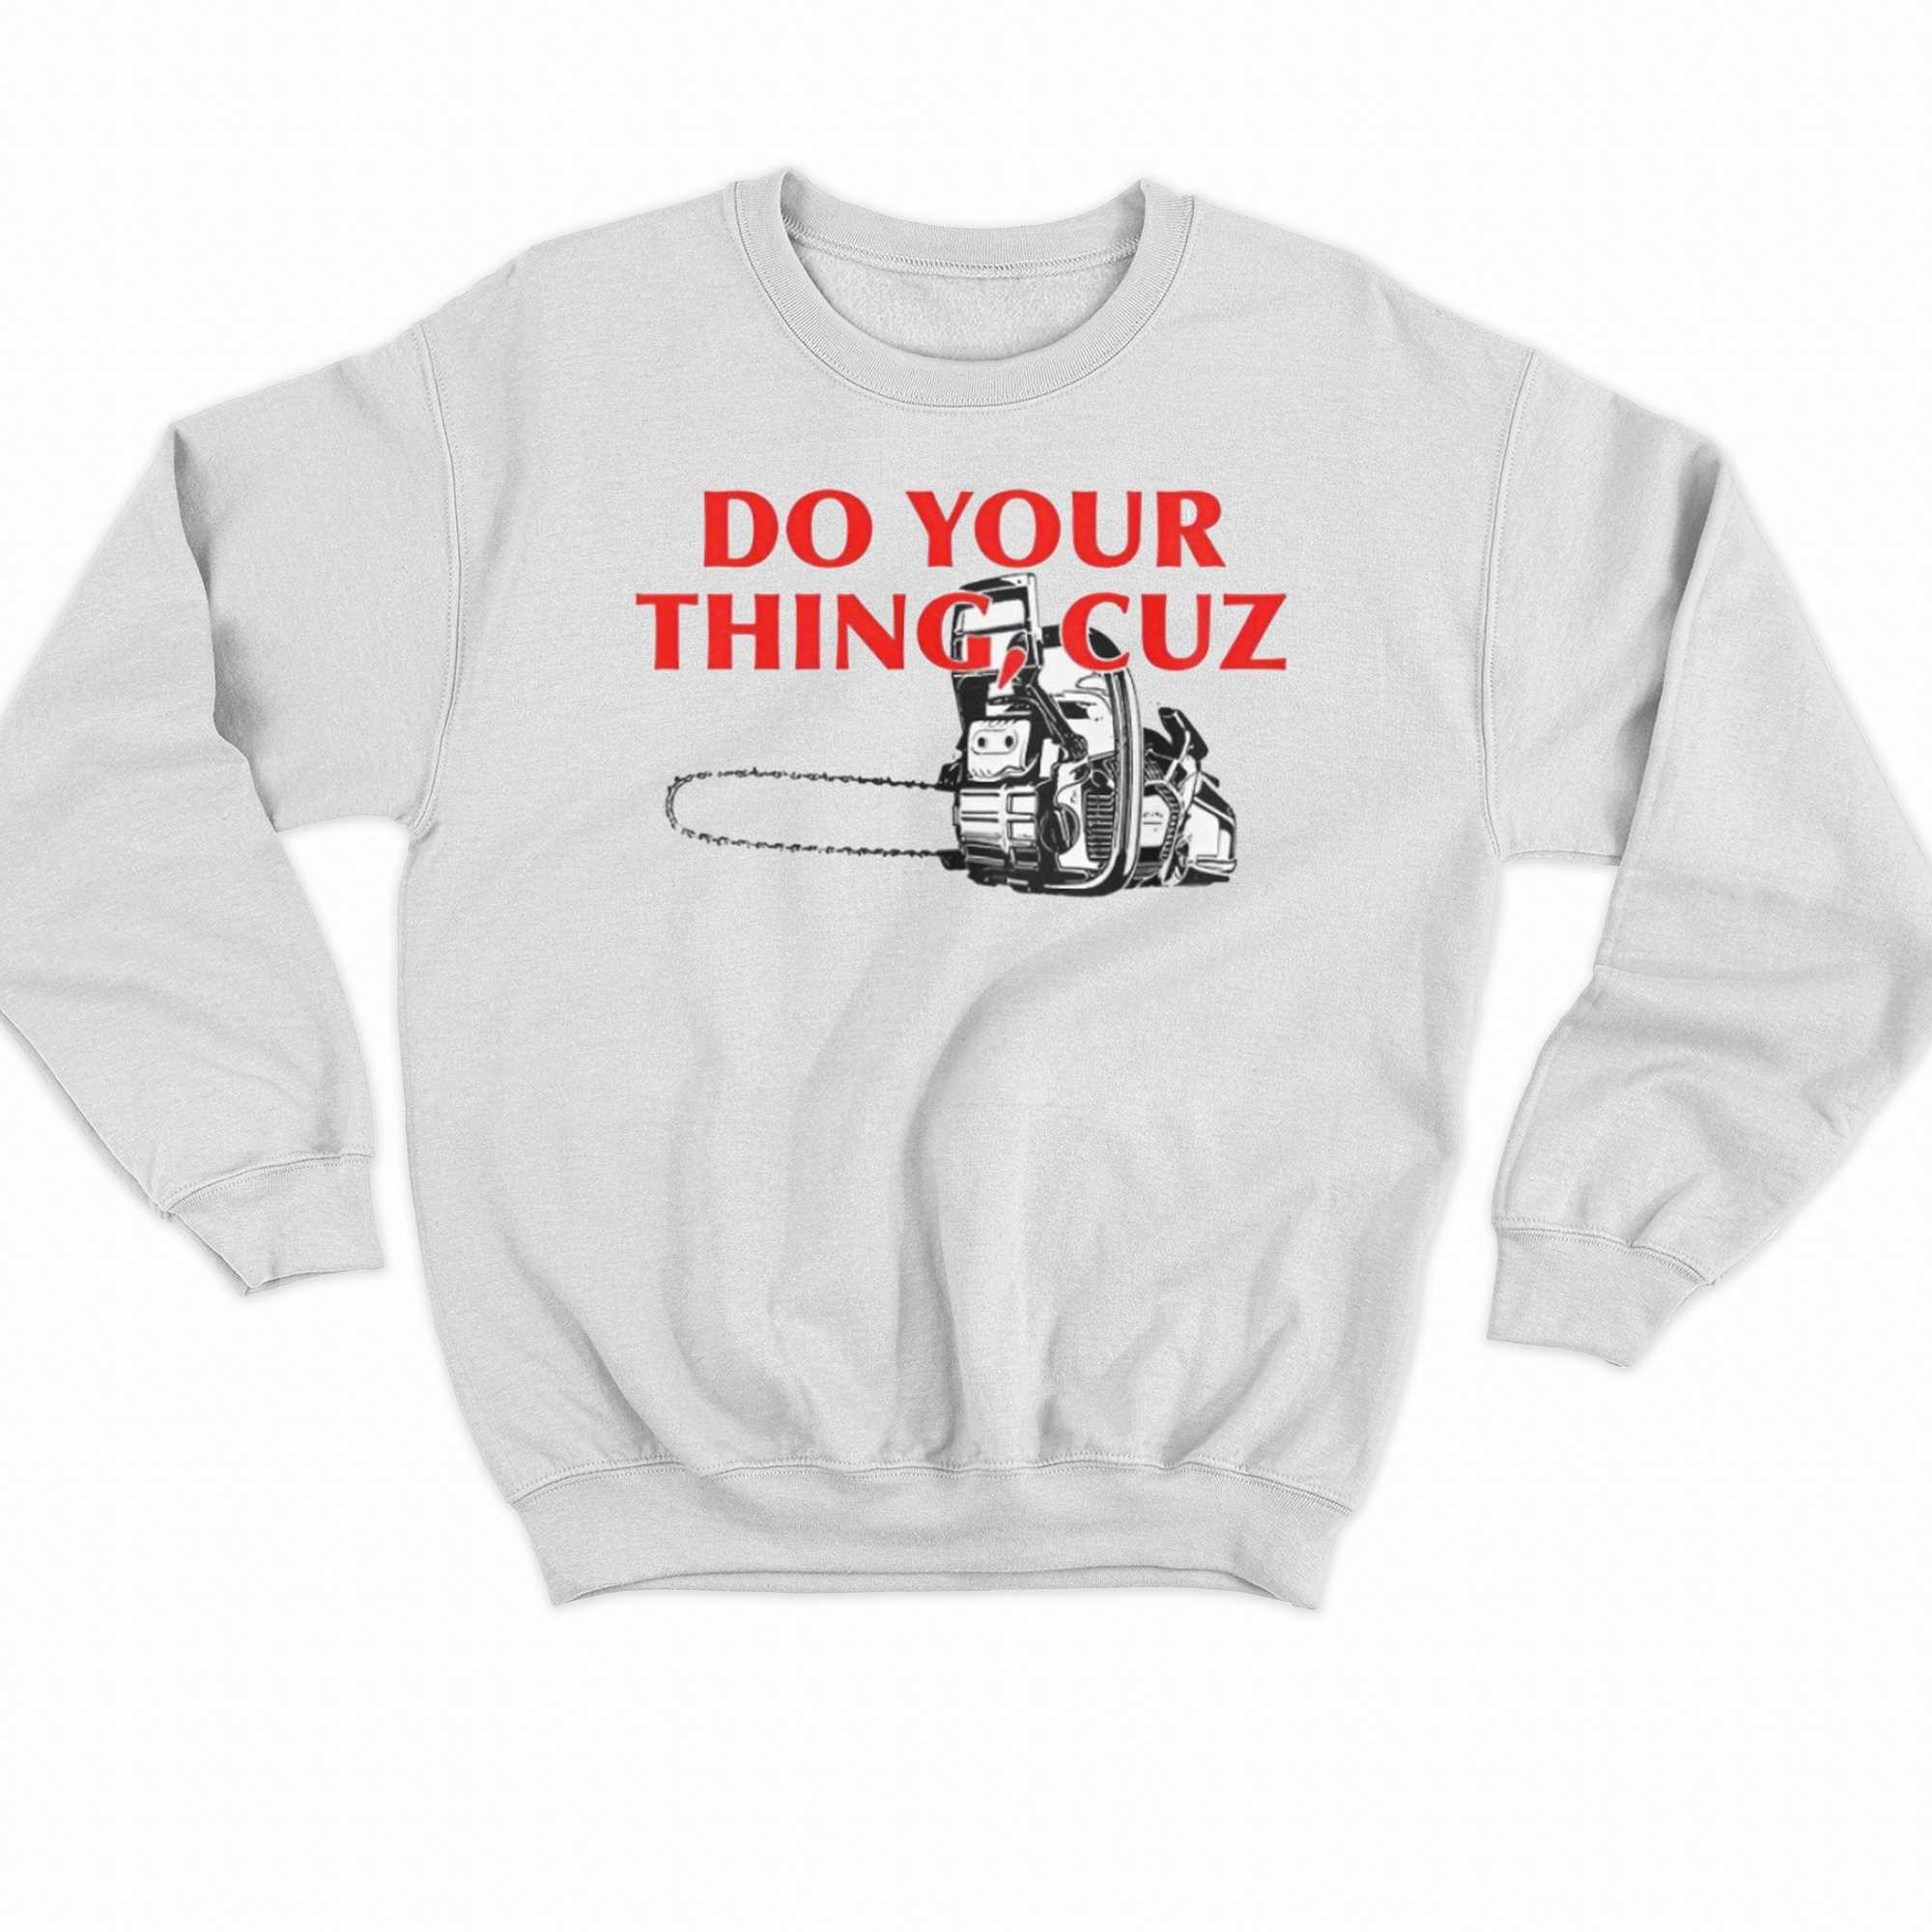 Do Your Things Cuz T-shirt - Shibtee Clothing